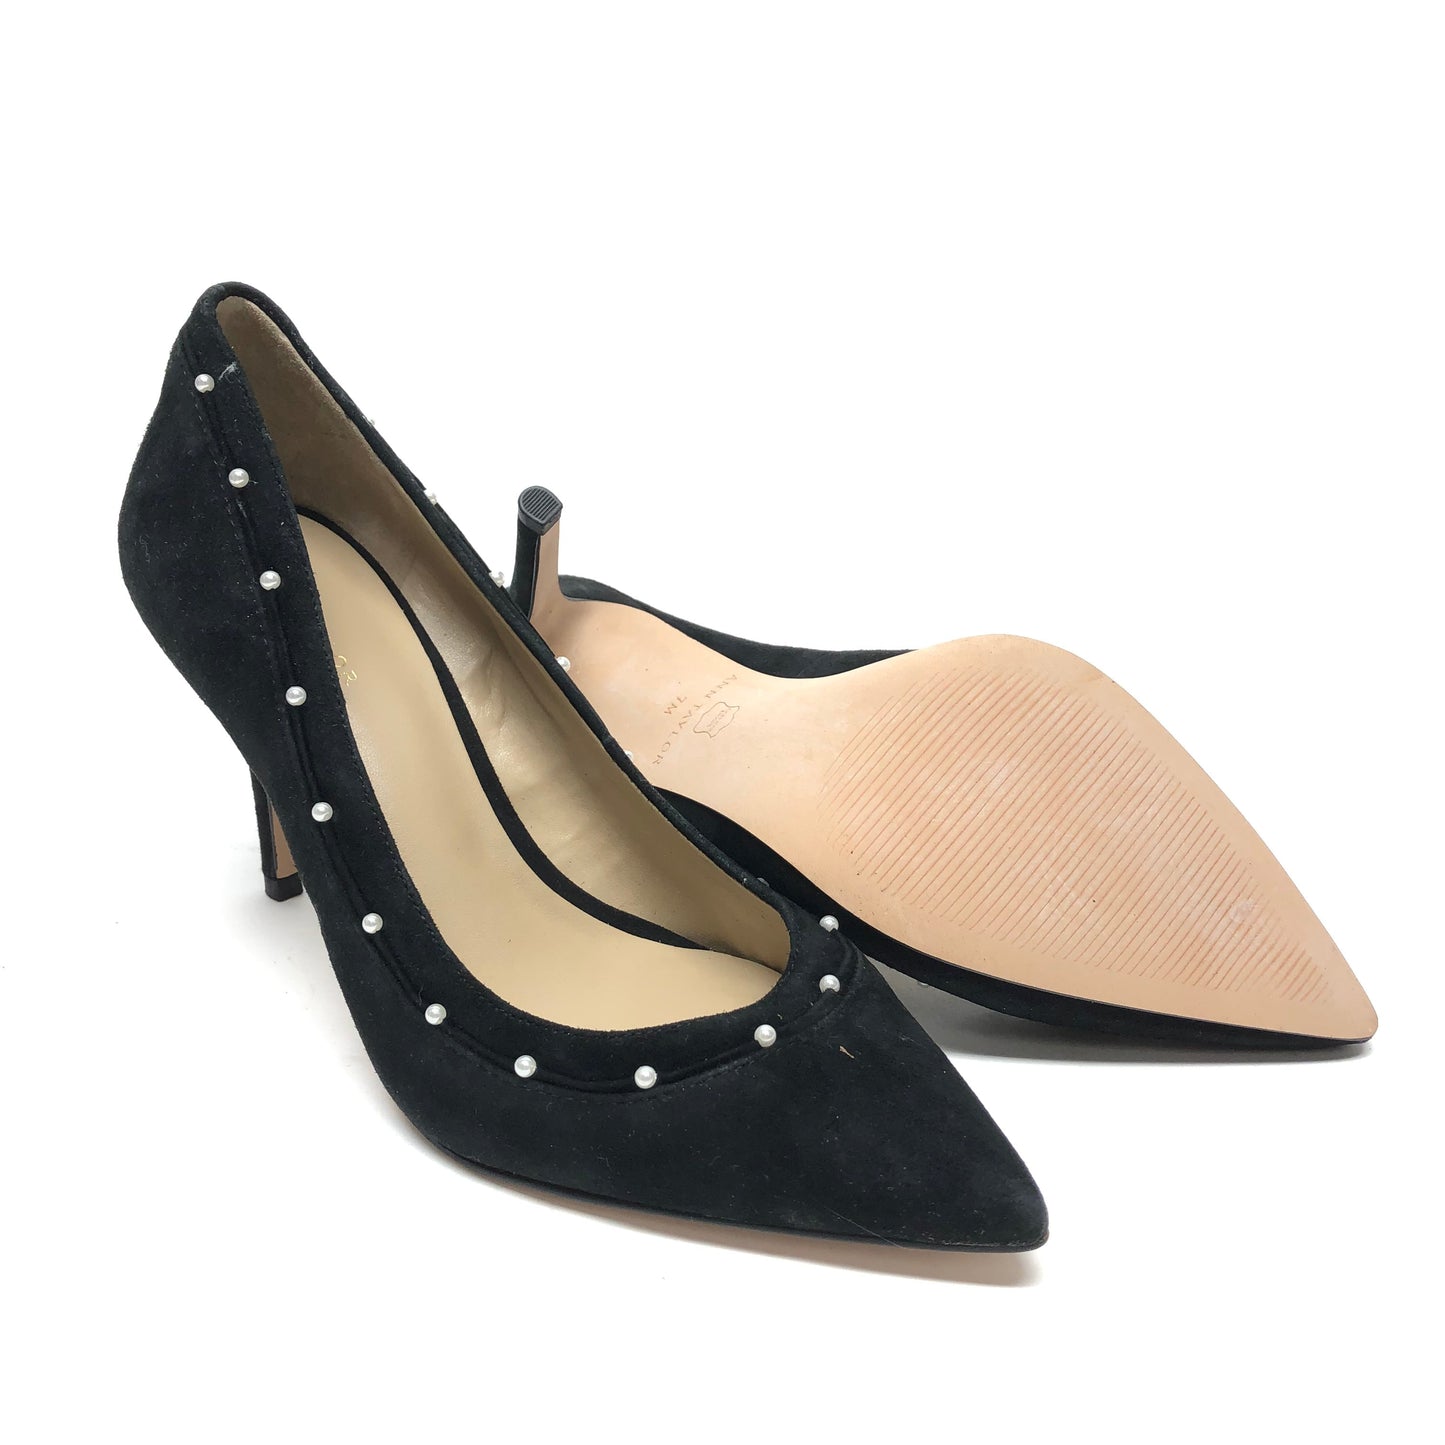 Black & Cream Shoes Heels Block Ann Taylor, Size 7